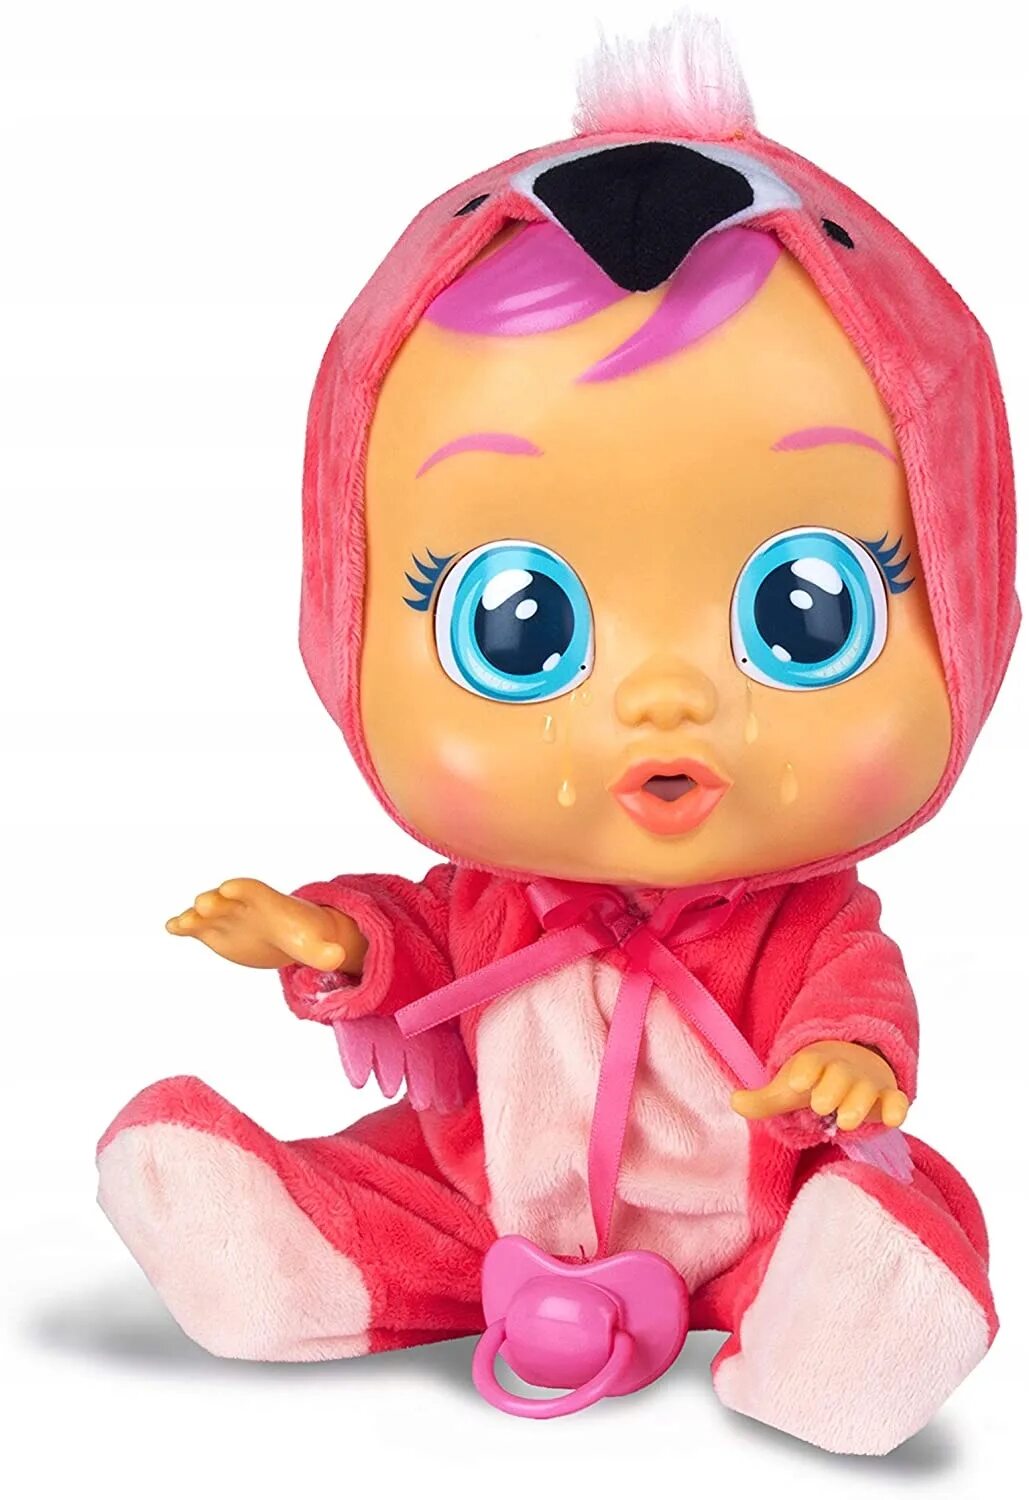 Crying babies куклы купить. Кукла IMC Toys Crybabies. Пупс IMC Toys Cry Babies Плачущий младенец Fancy, 31 см, 97056. Кукла Cry Babies Coney. Кукла IMC Toys Cry Babies Плачущий младенец Coney, 31 см.